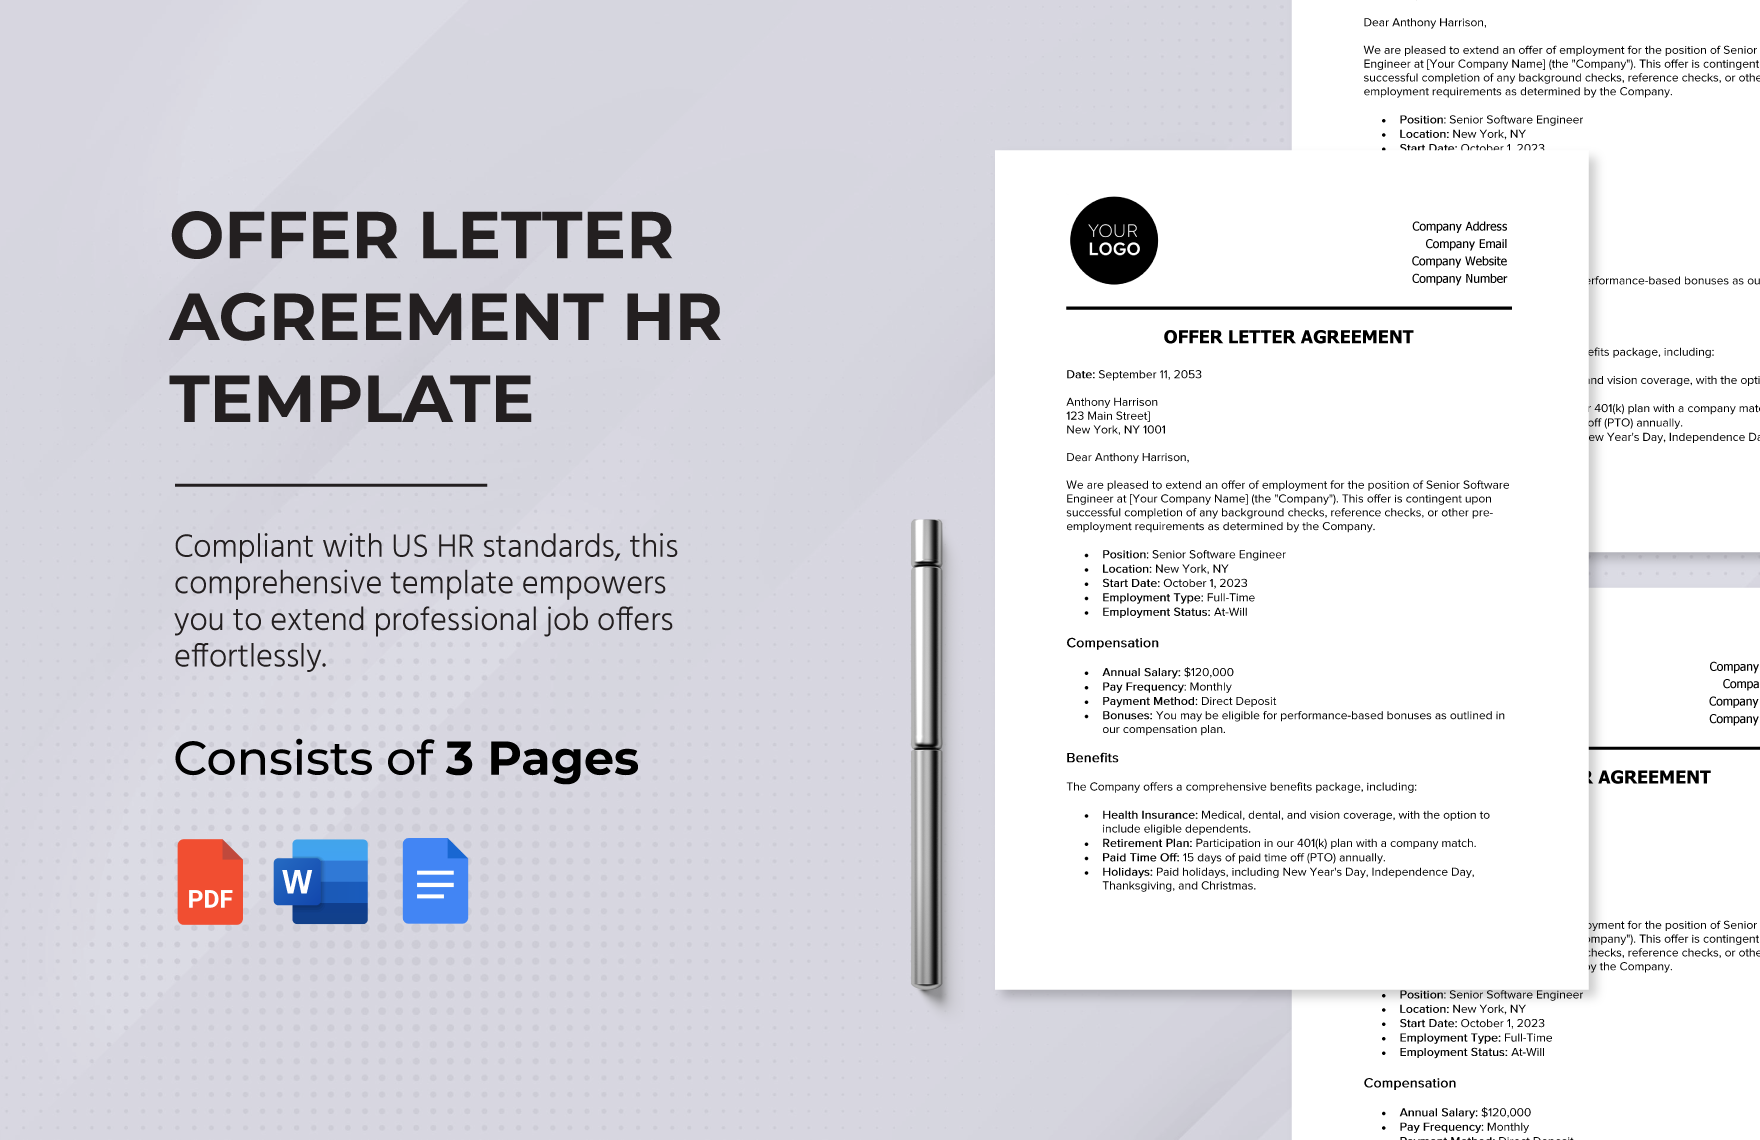 Offer Letter Agreement HR Template